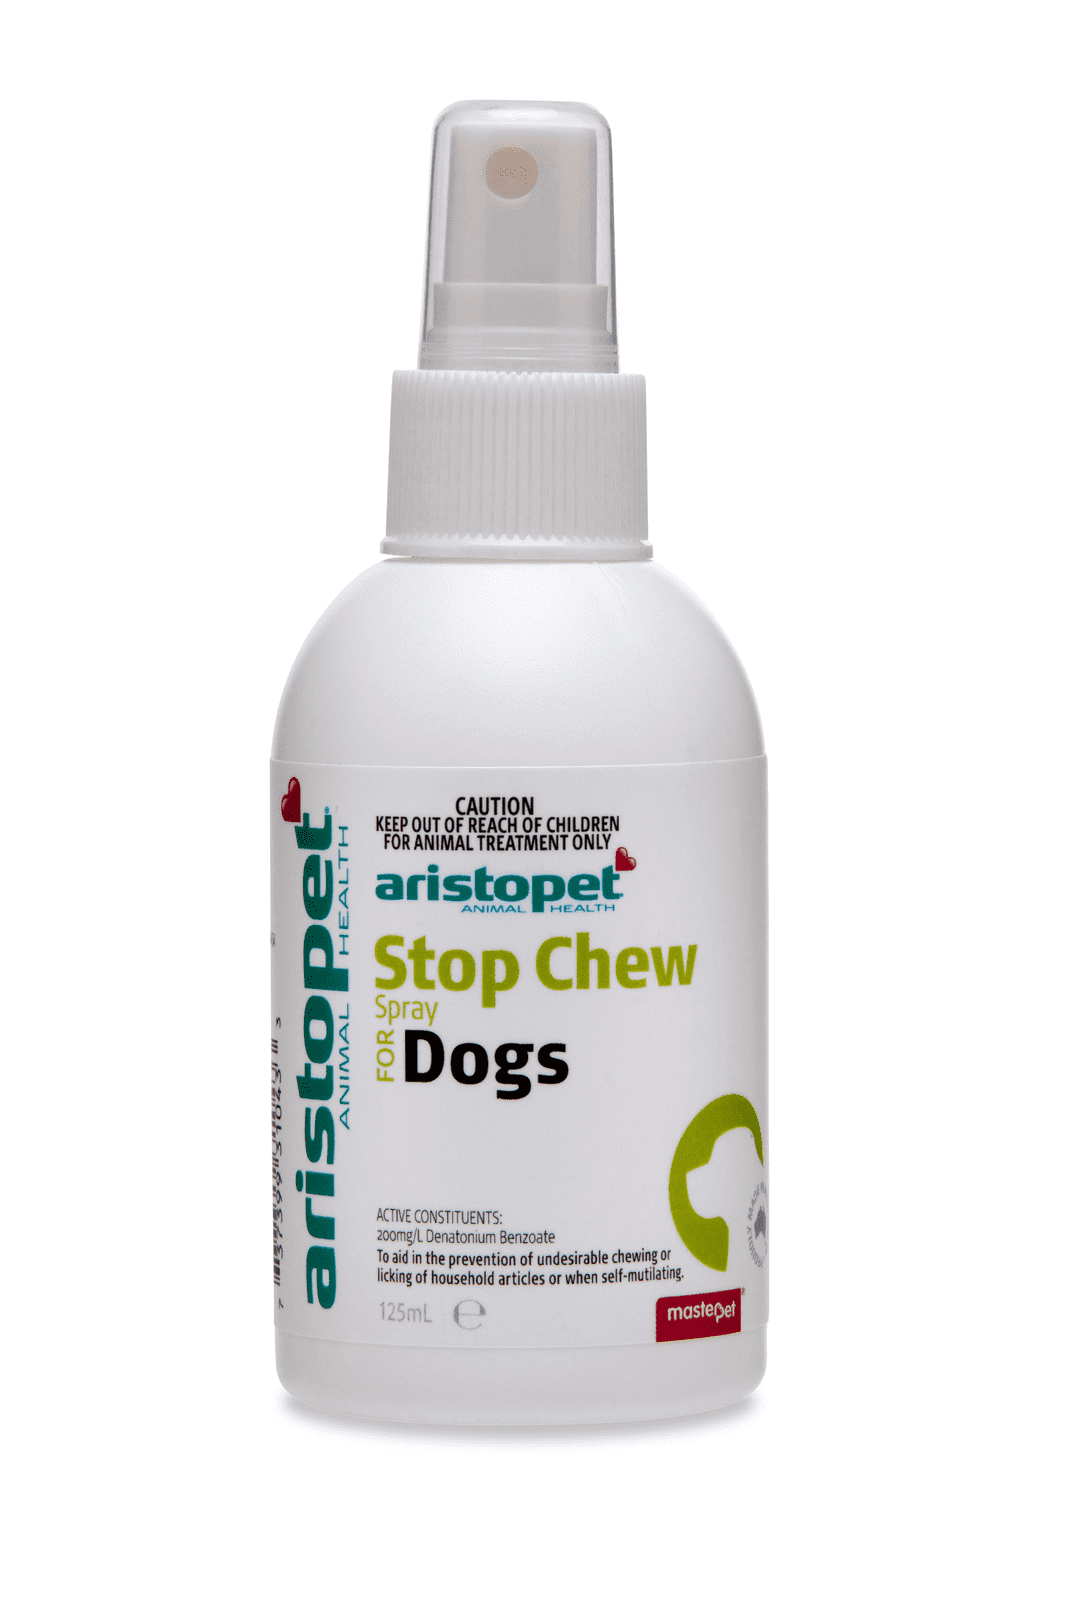 Aristopet Stop Chew Spray